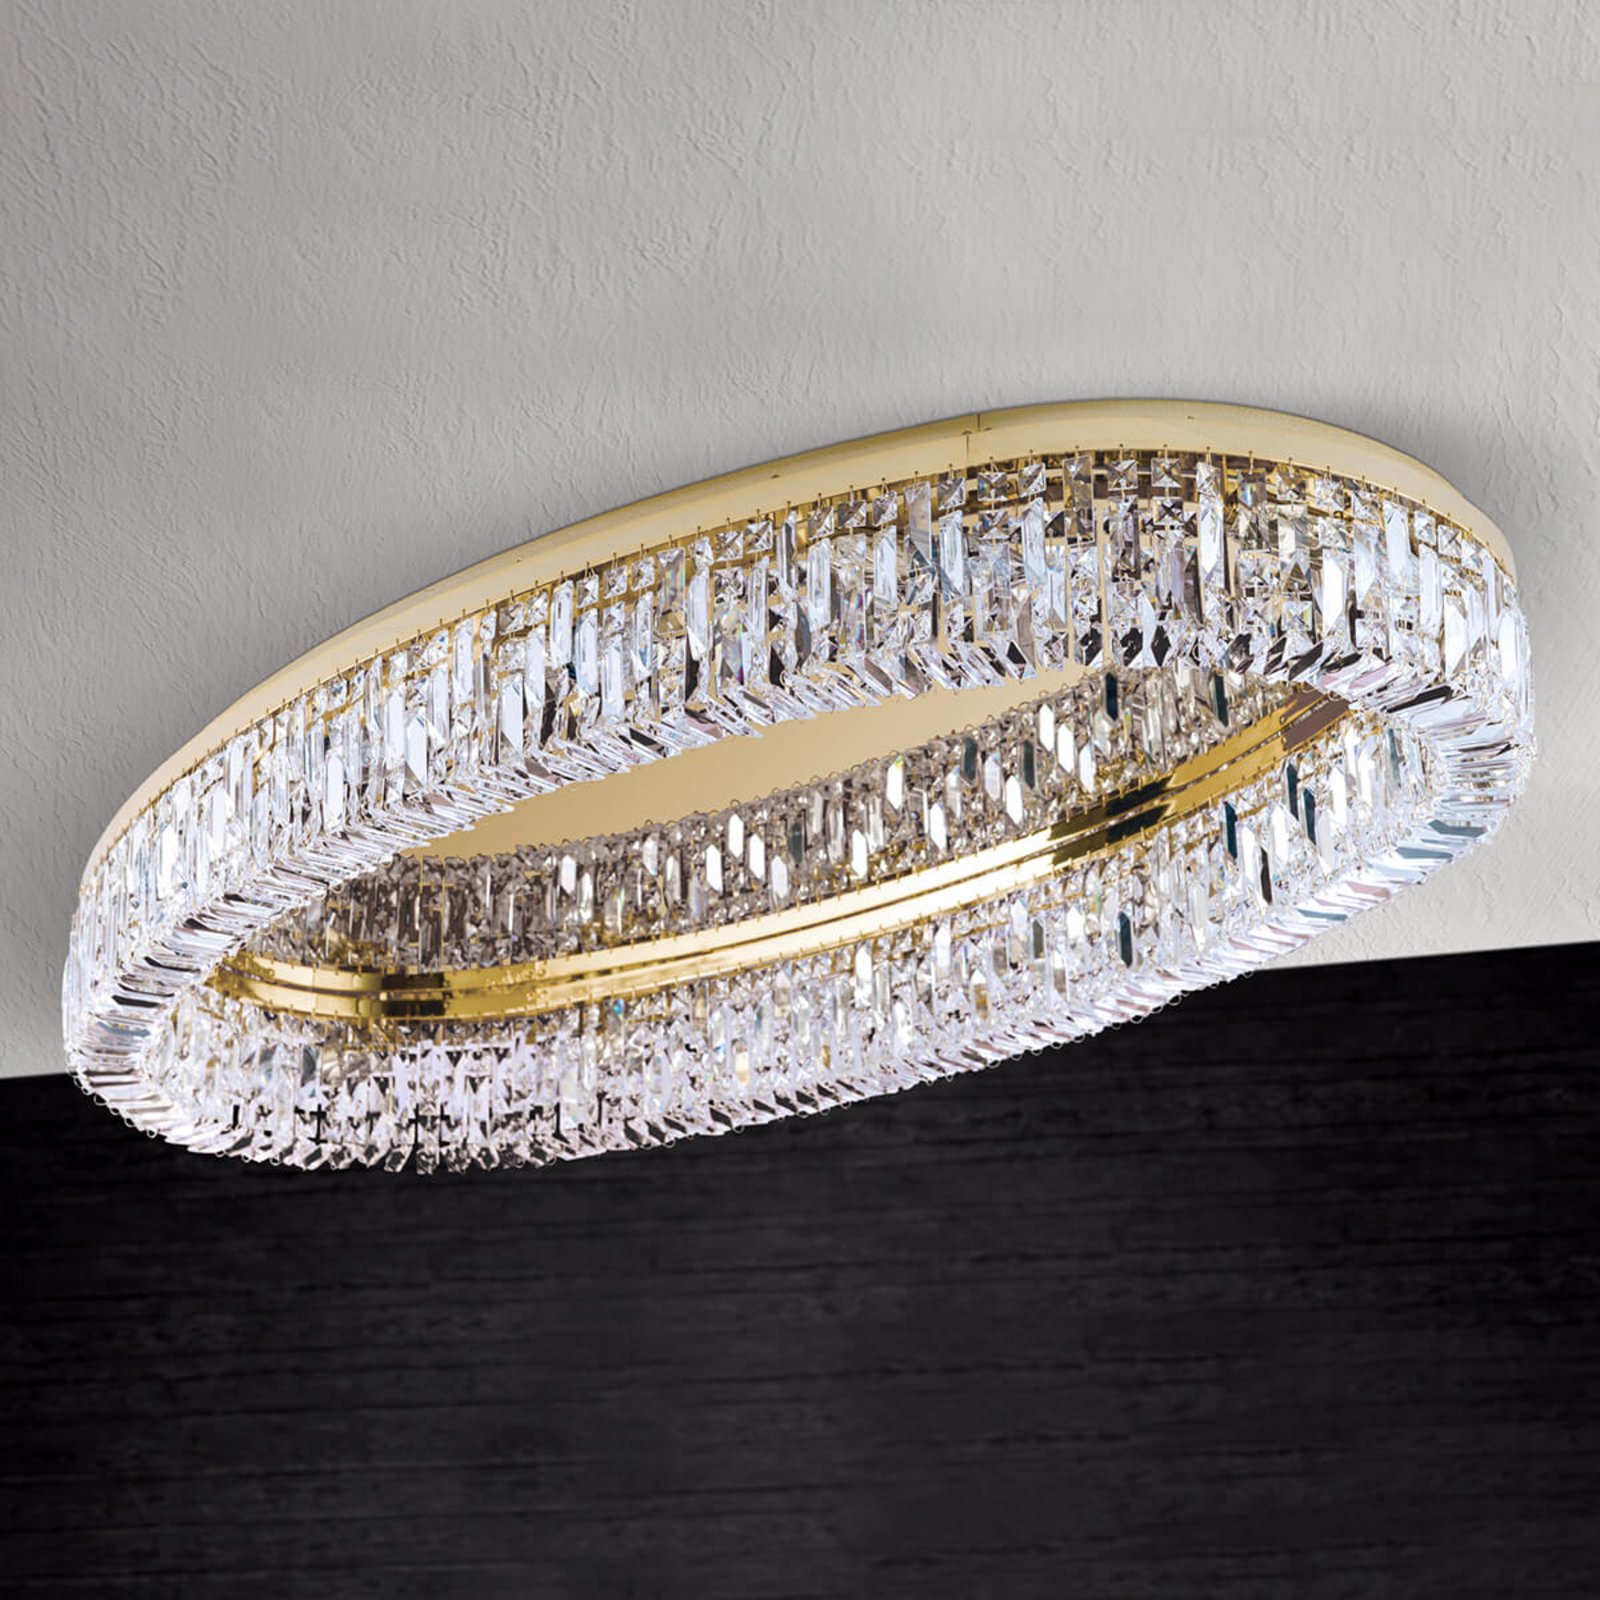 Ovale premium plafondlamp Ring met kristallen